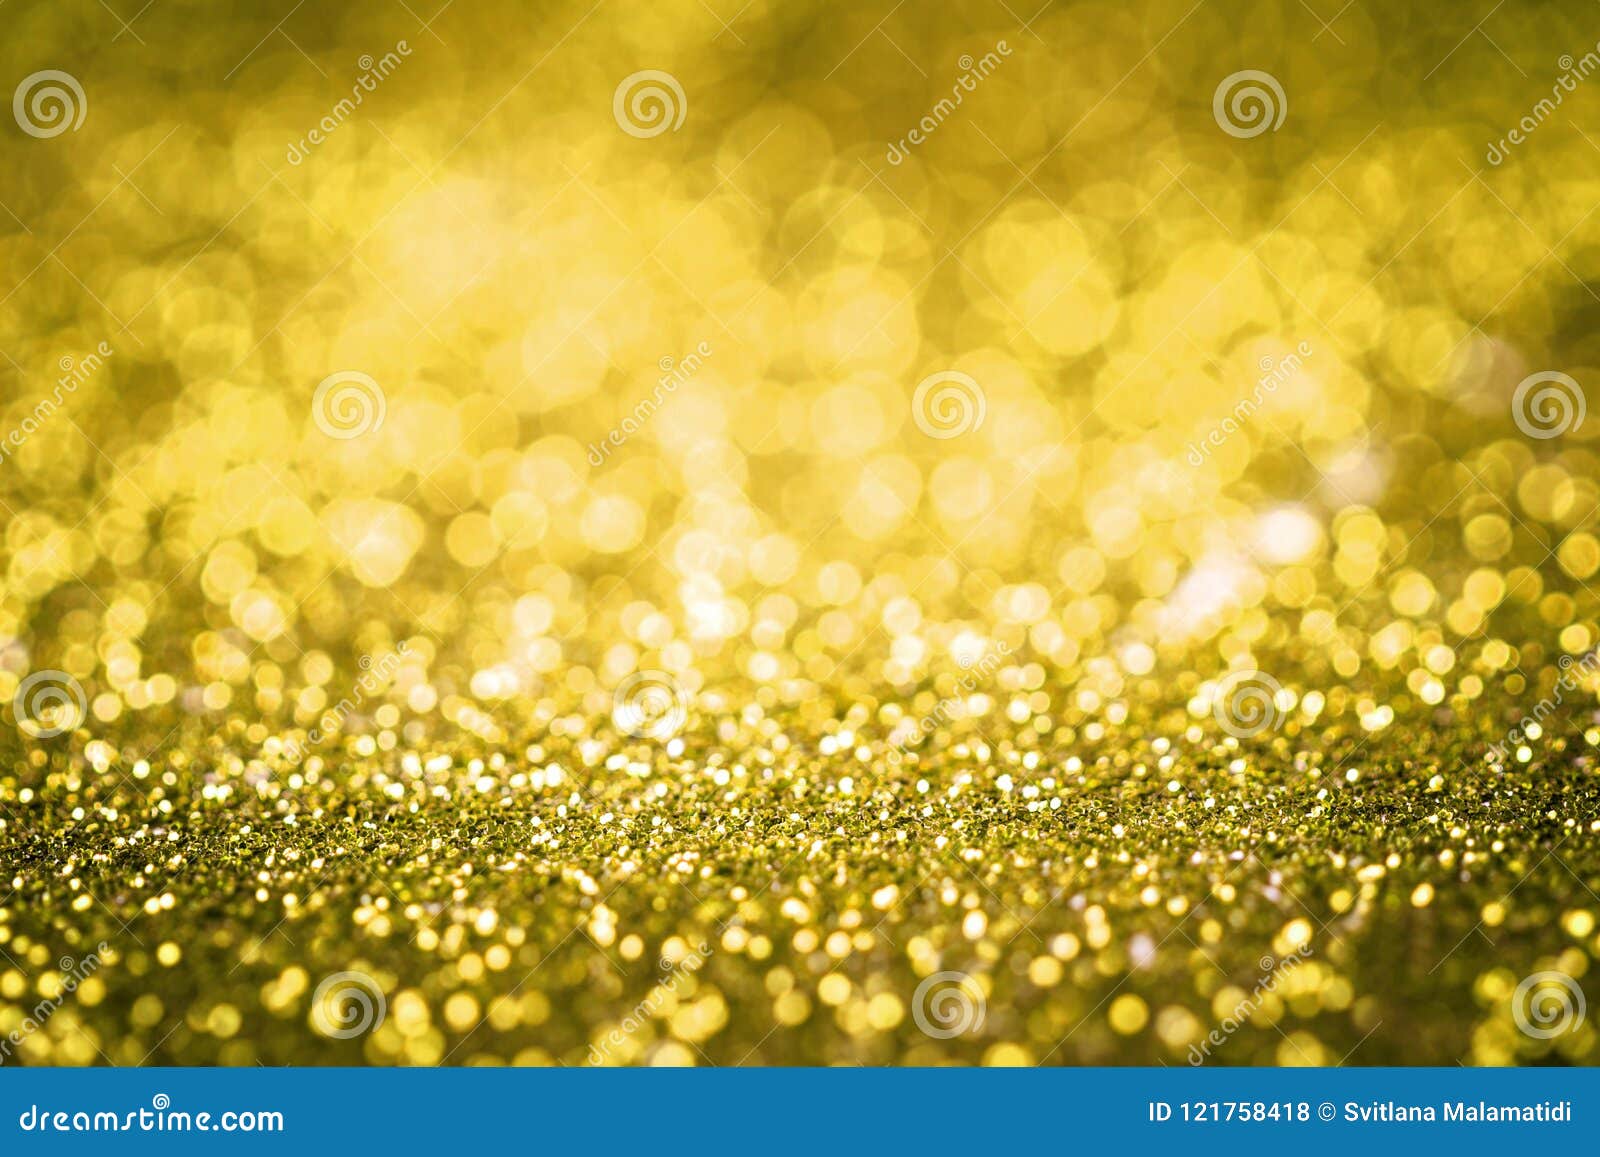 149,383 Yellow Glitter Stock Photos - Free & Royalty-Free Stock